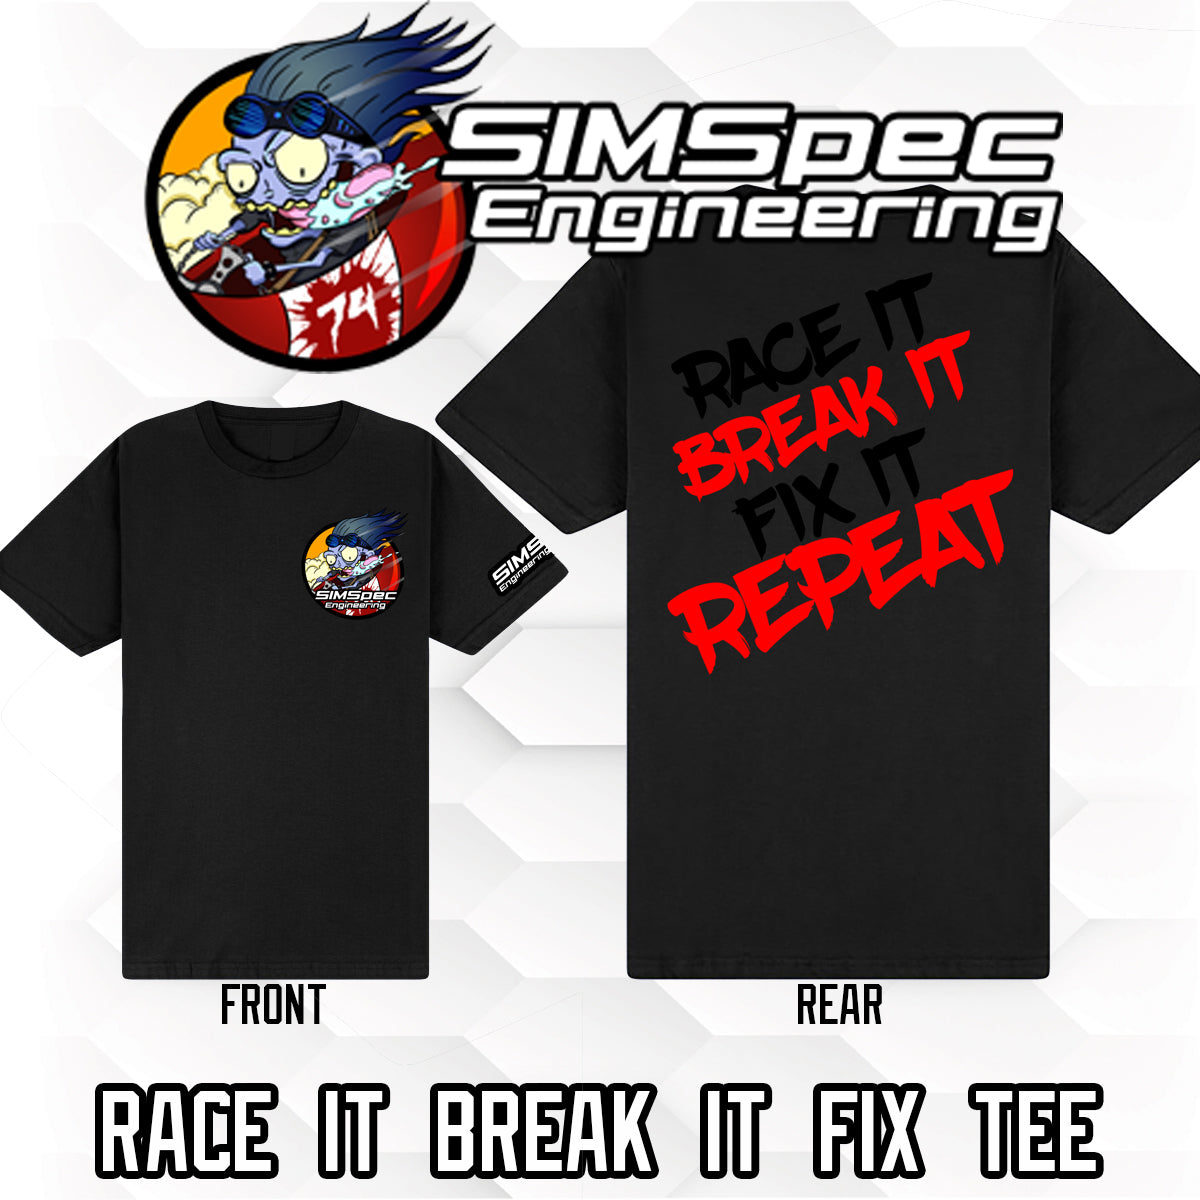 Race IT Break IT Fix IT Repeat Logo T-Shirt ~ Black and Red